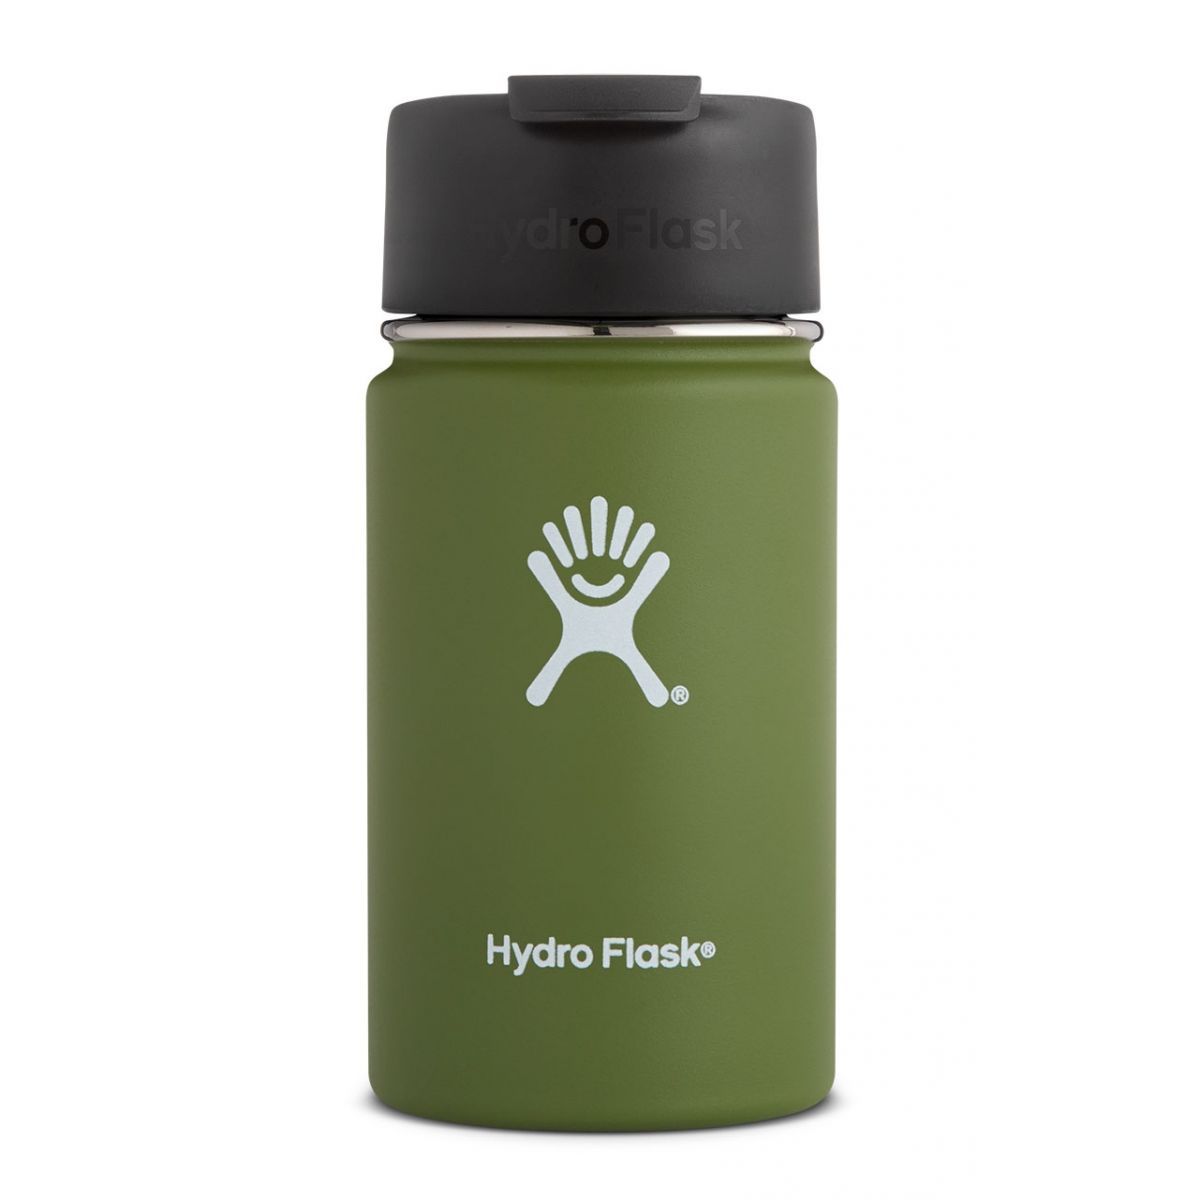 hydro flask sale 50 off